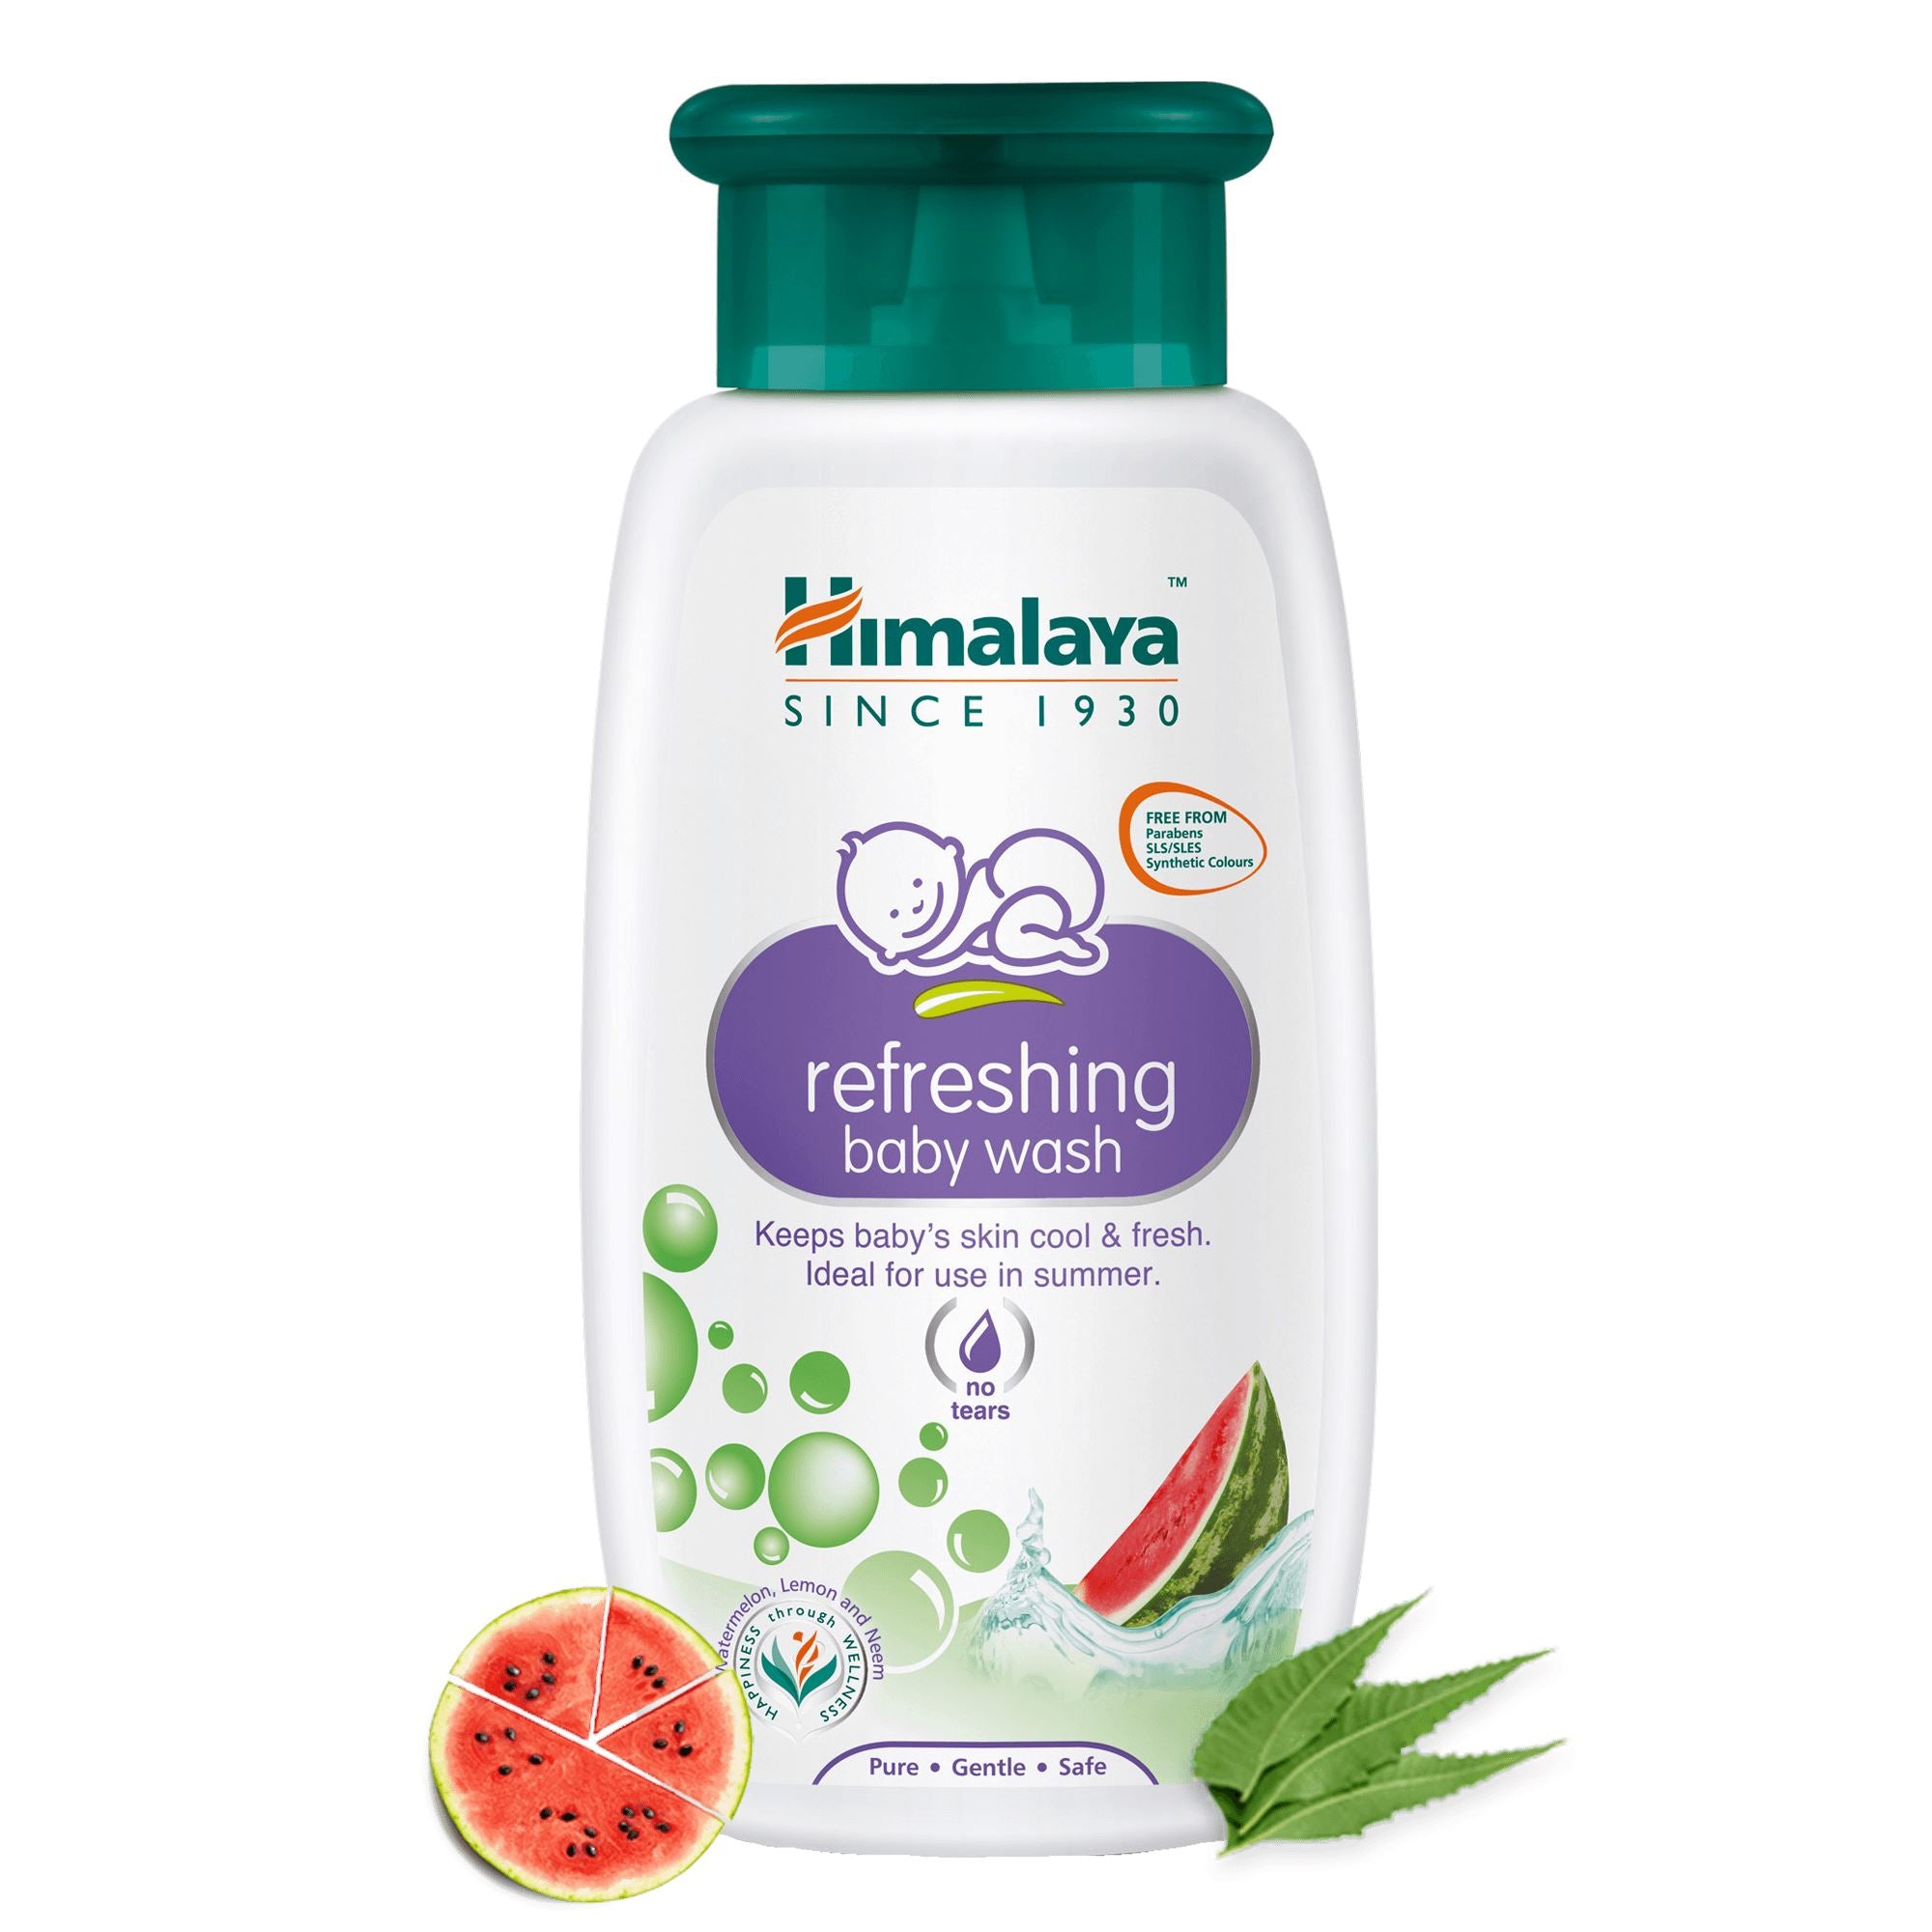 Himalaya Refreshing baby wash - Keeps baby's skin cool and fresh